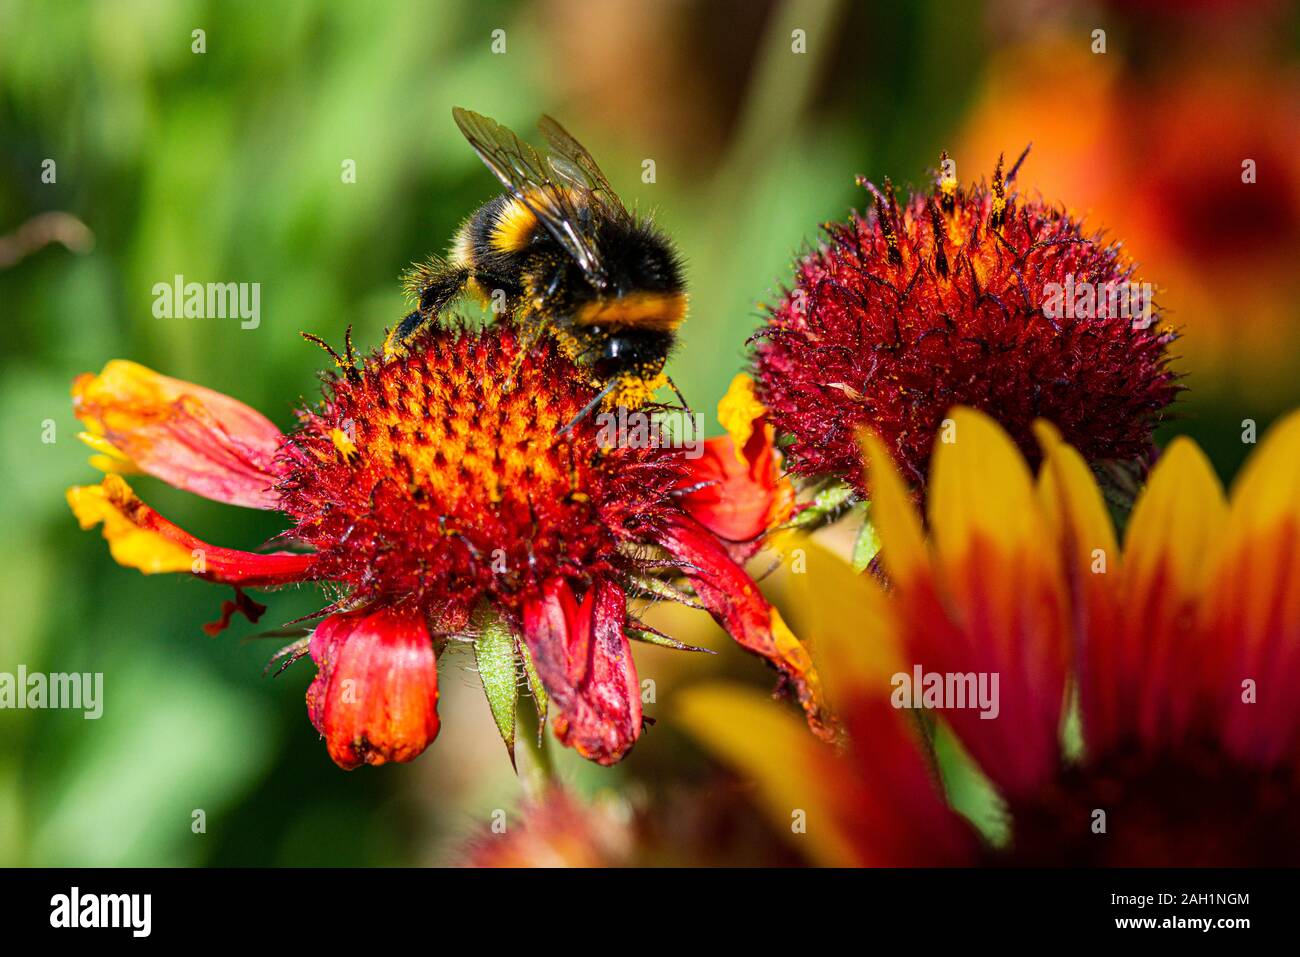 A bumble bee (Bombus) on a blanket flower (Gaillardia) Stock Photo